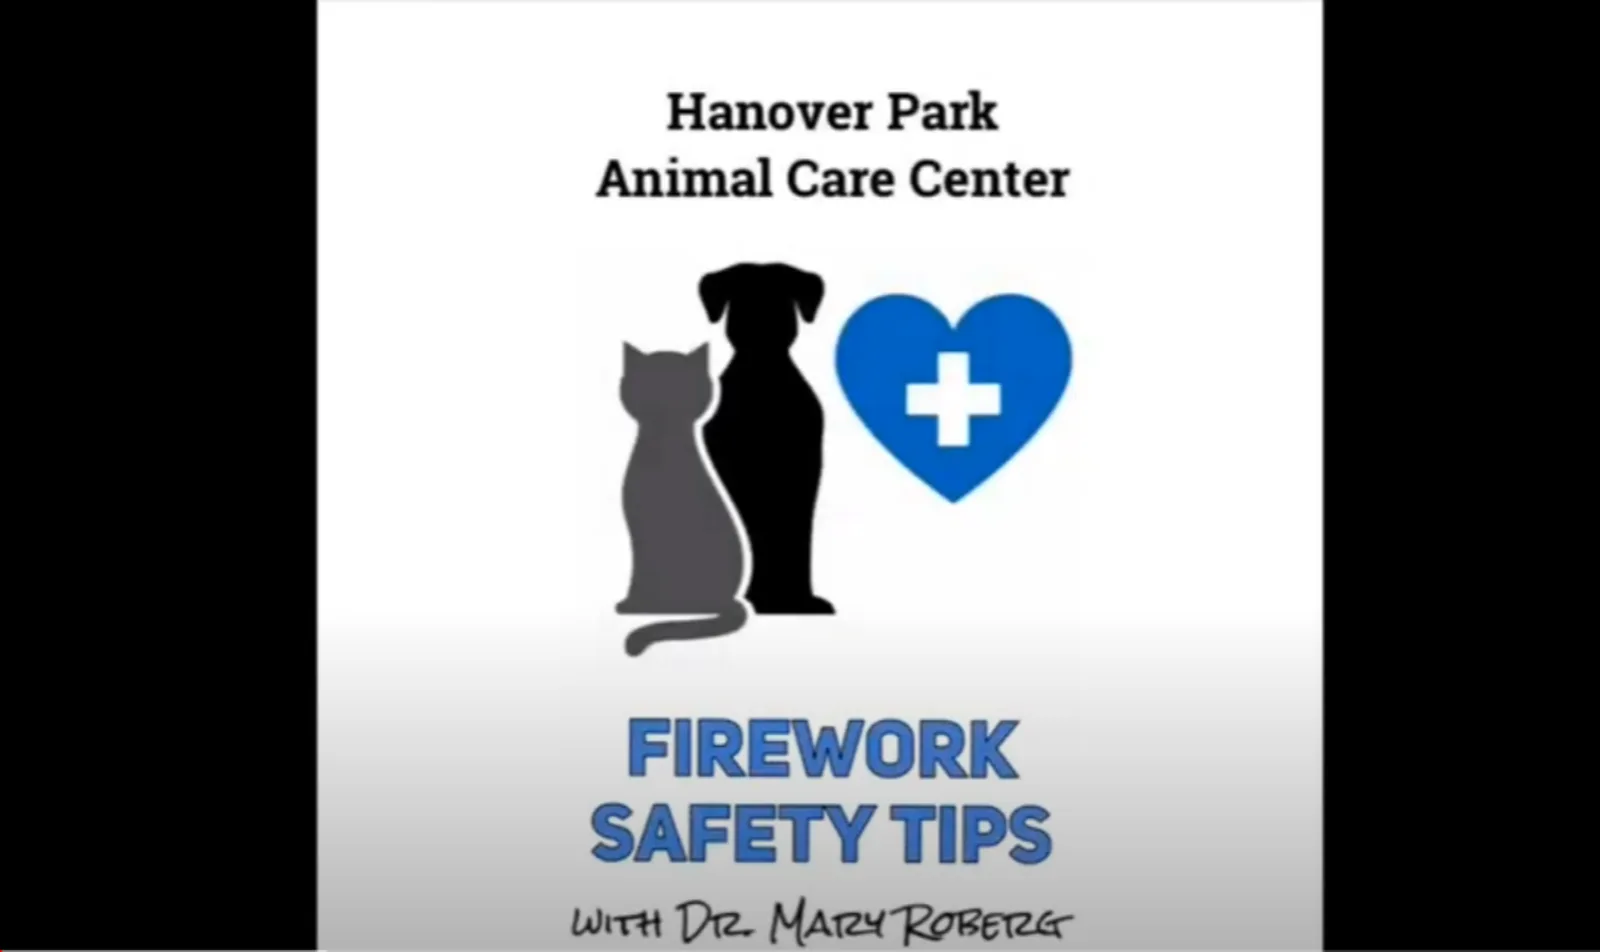 Firework Safety Tips Video at Hanover Park Animal Care Center